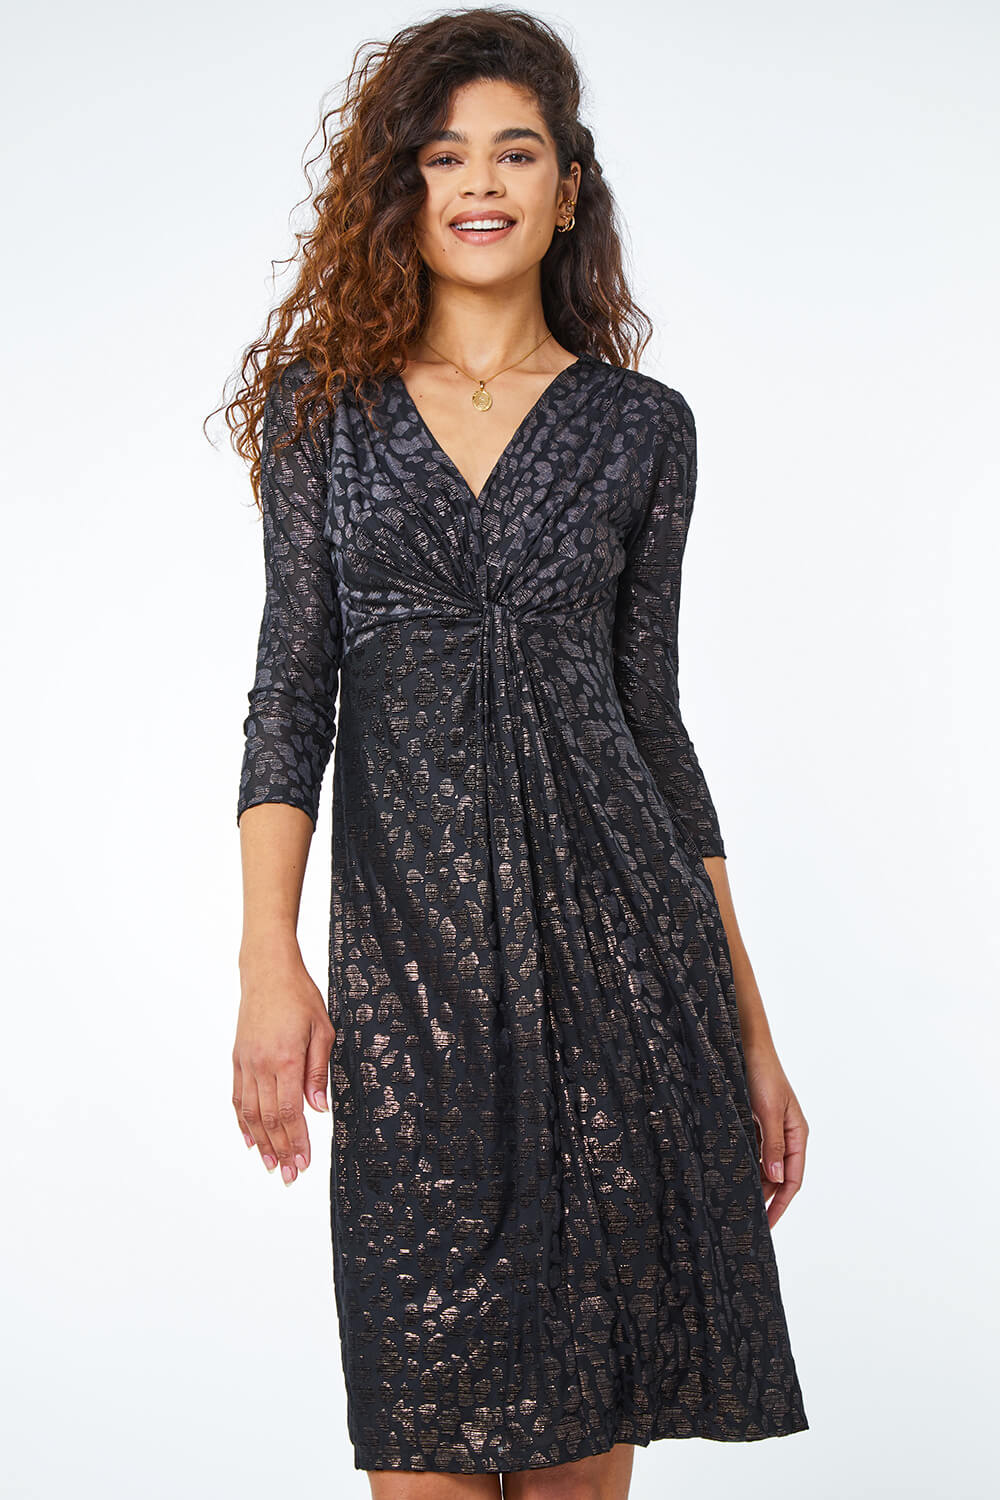 Black Leopard Print Shimmer Twist Wrap Dress, Image 2 of 5